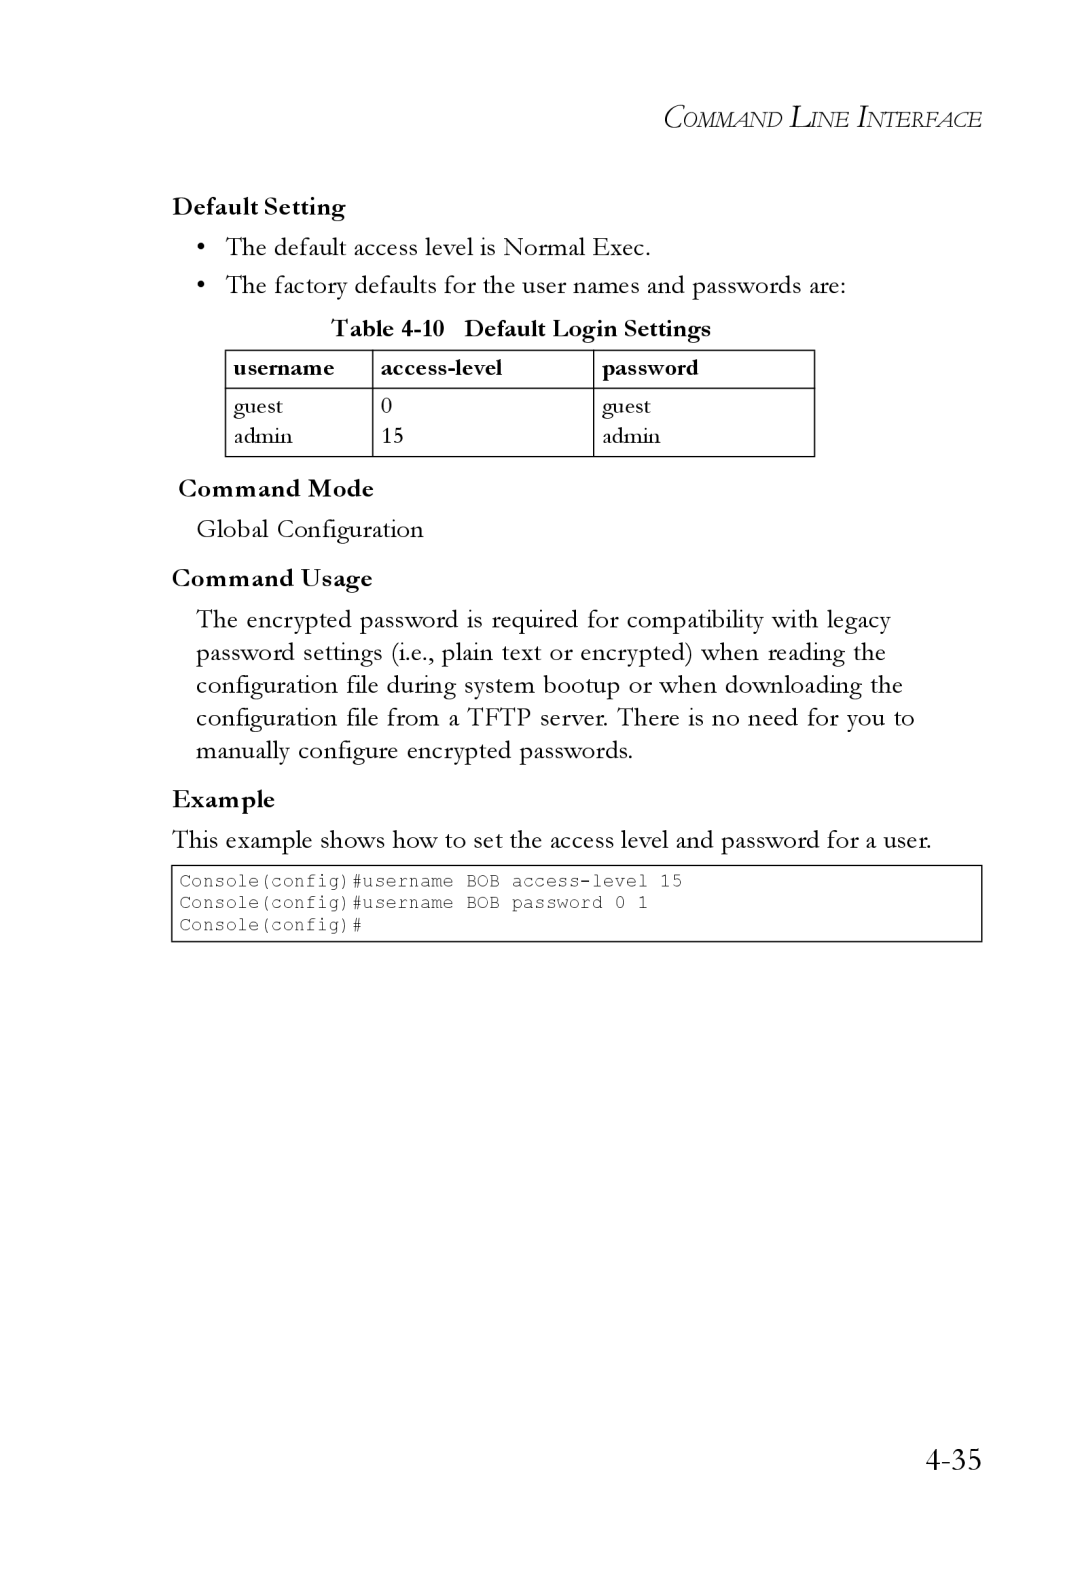 SMC Networks SMC6824M manual Default Login Settings, Username Access-level Password 